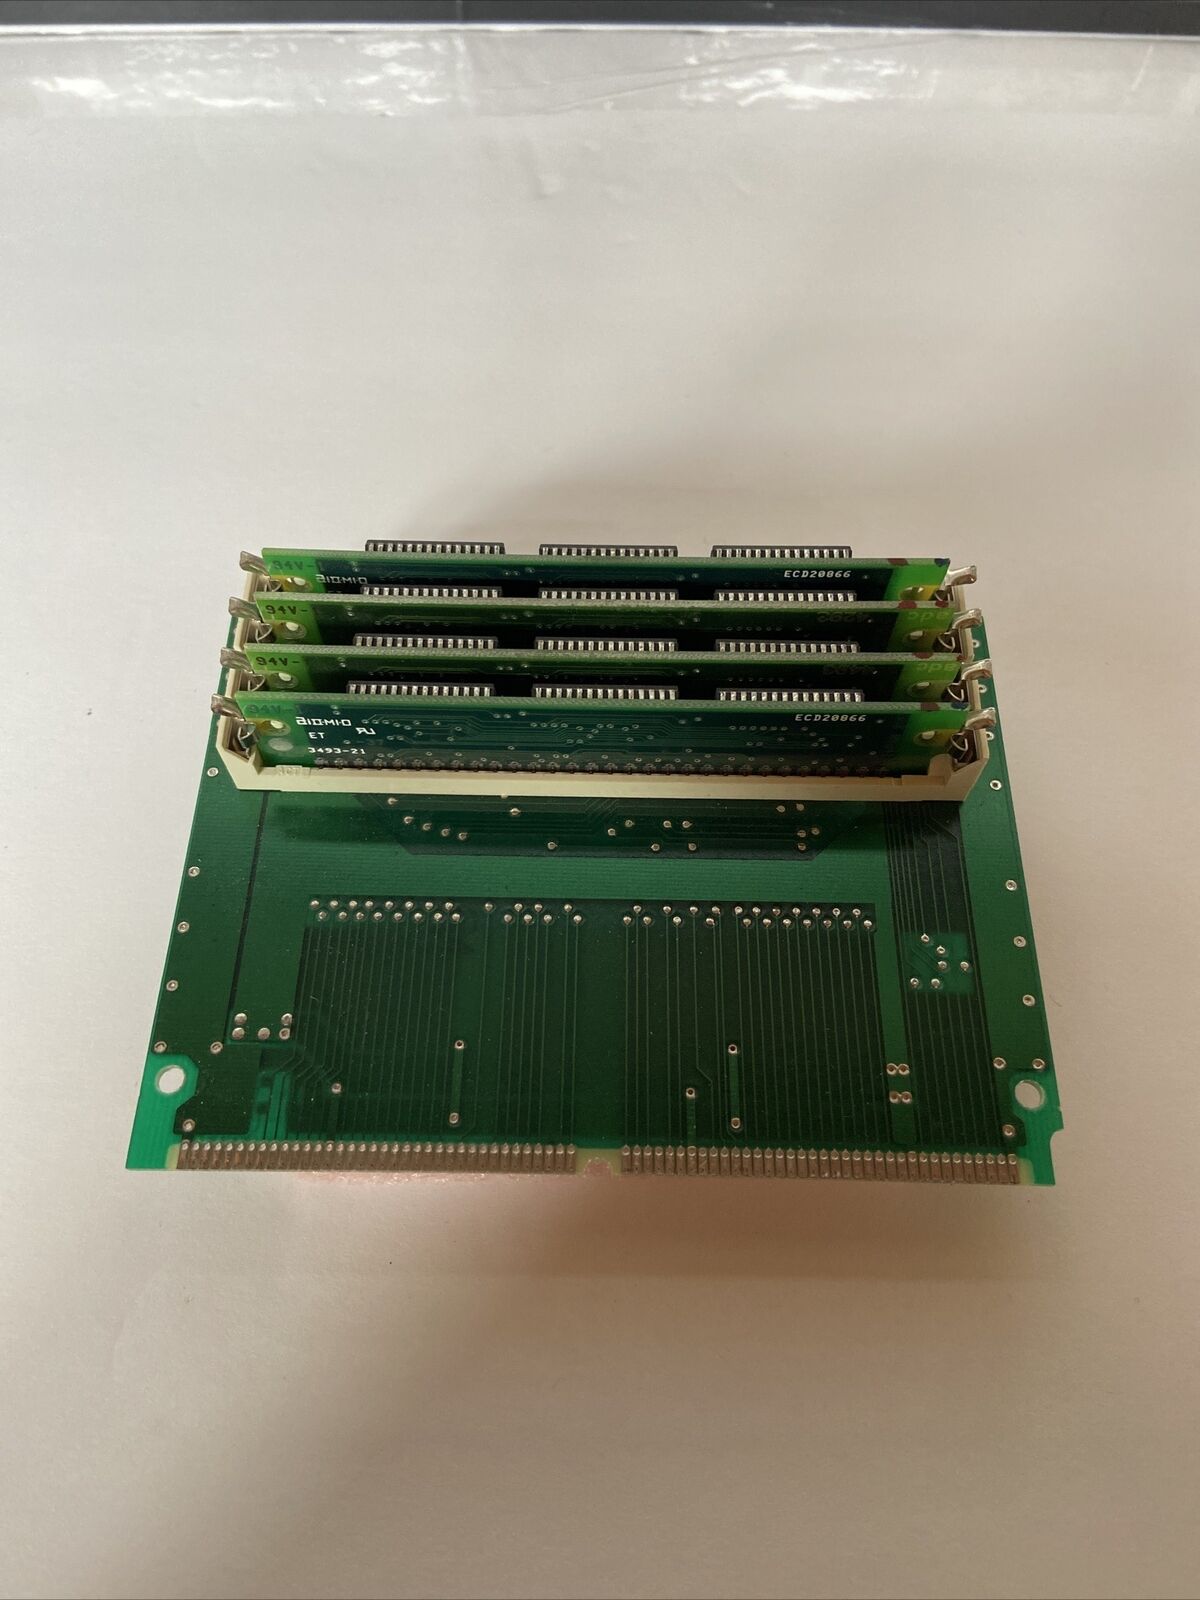 SimmVerter 30 pin to 72 pin SIMM converter Model B High profile with 4x1mb SIMMS